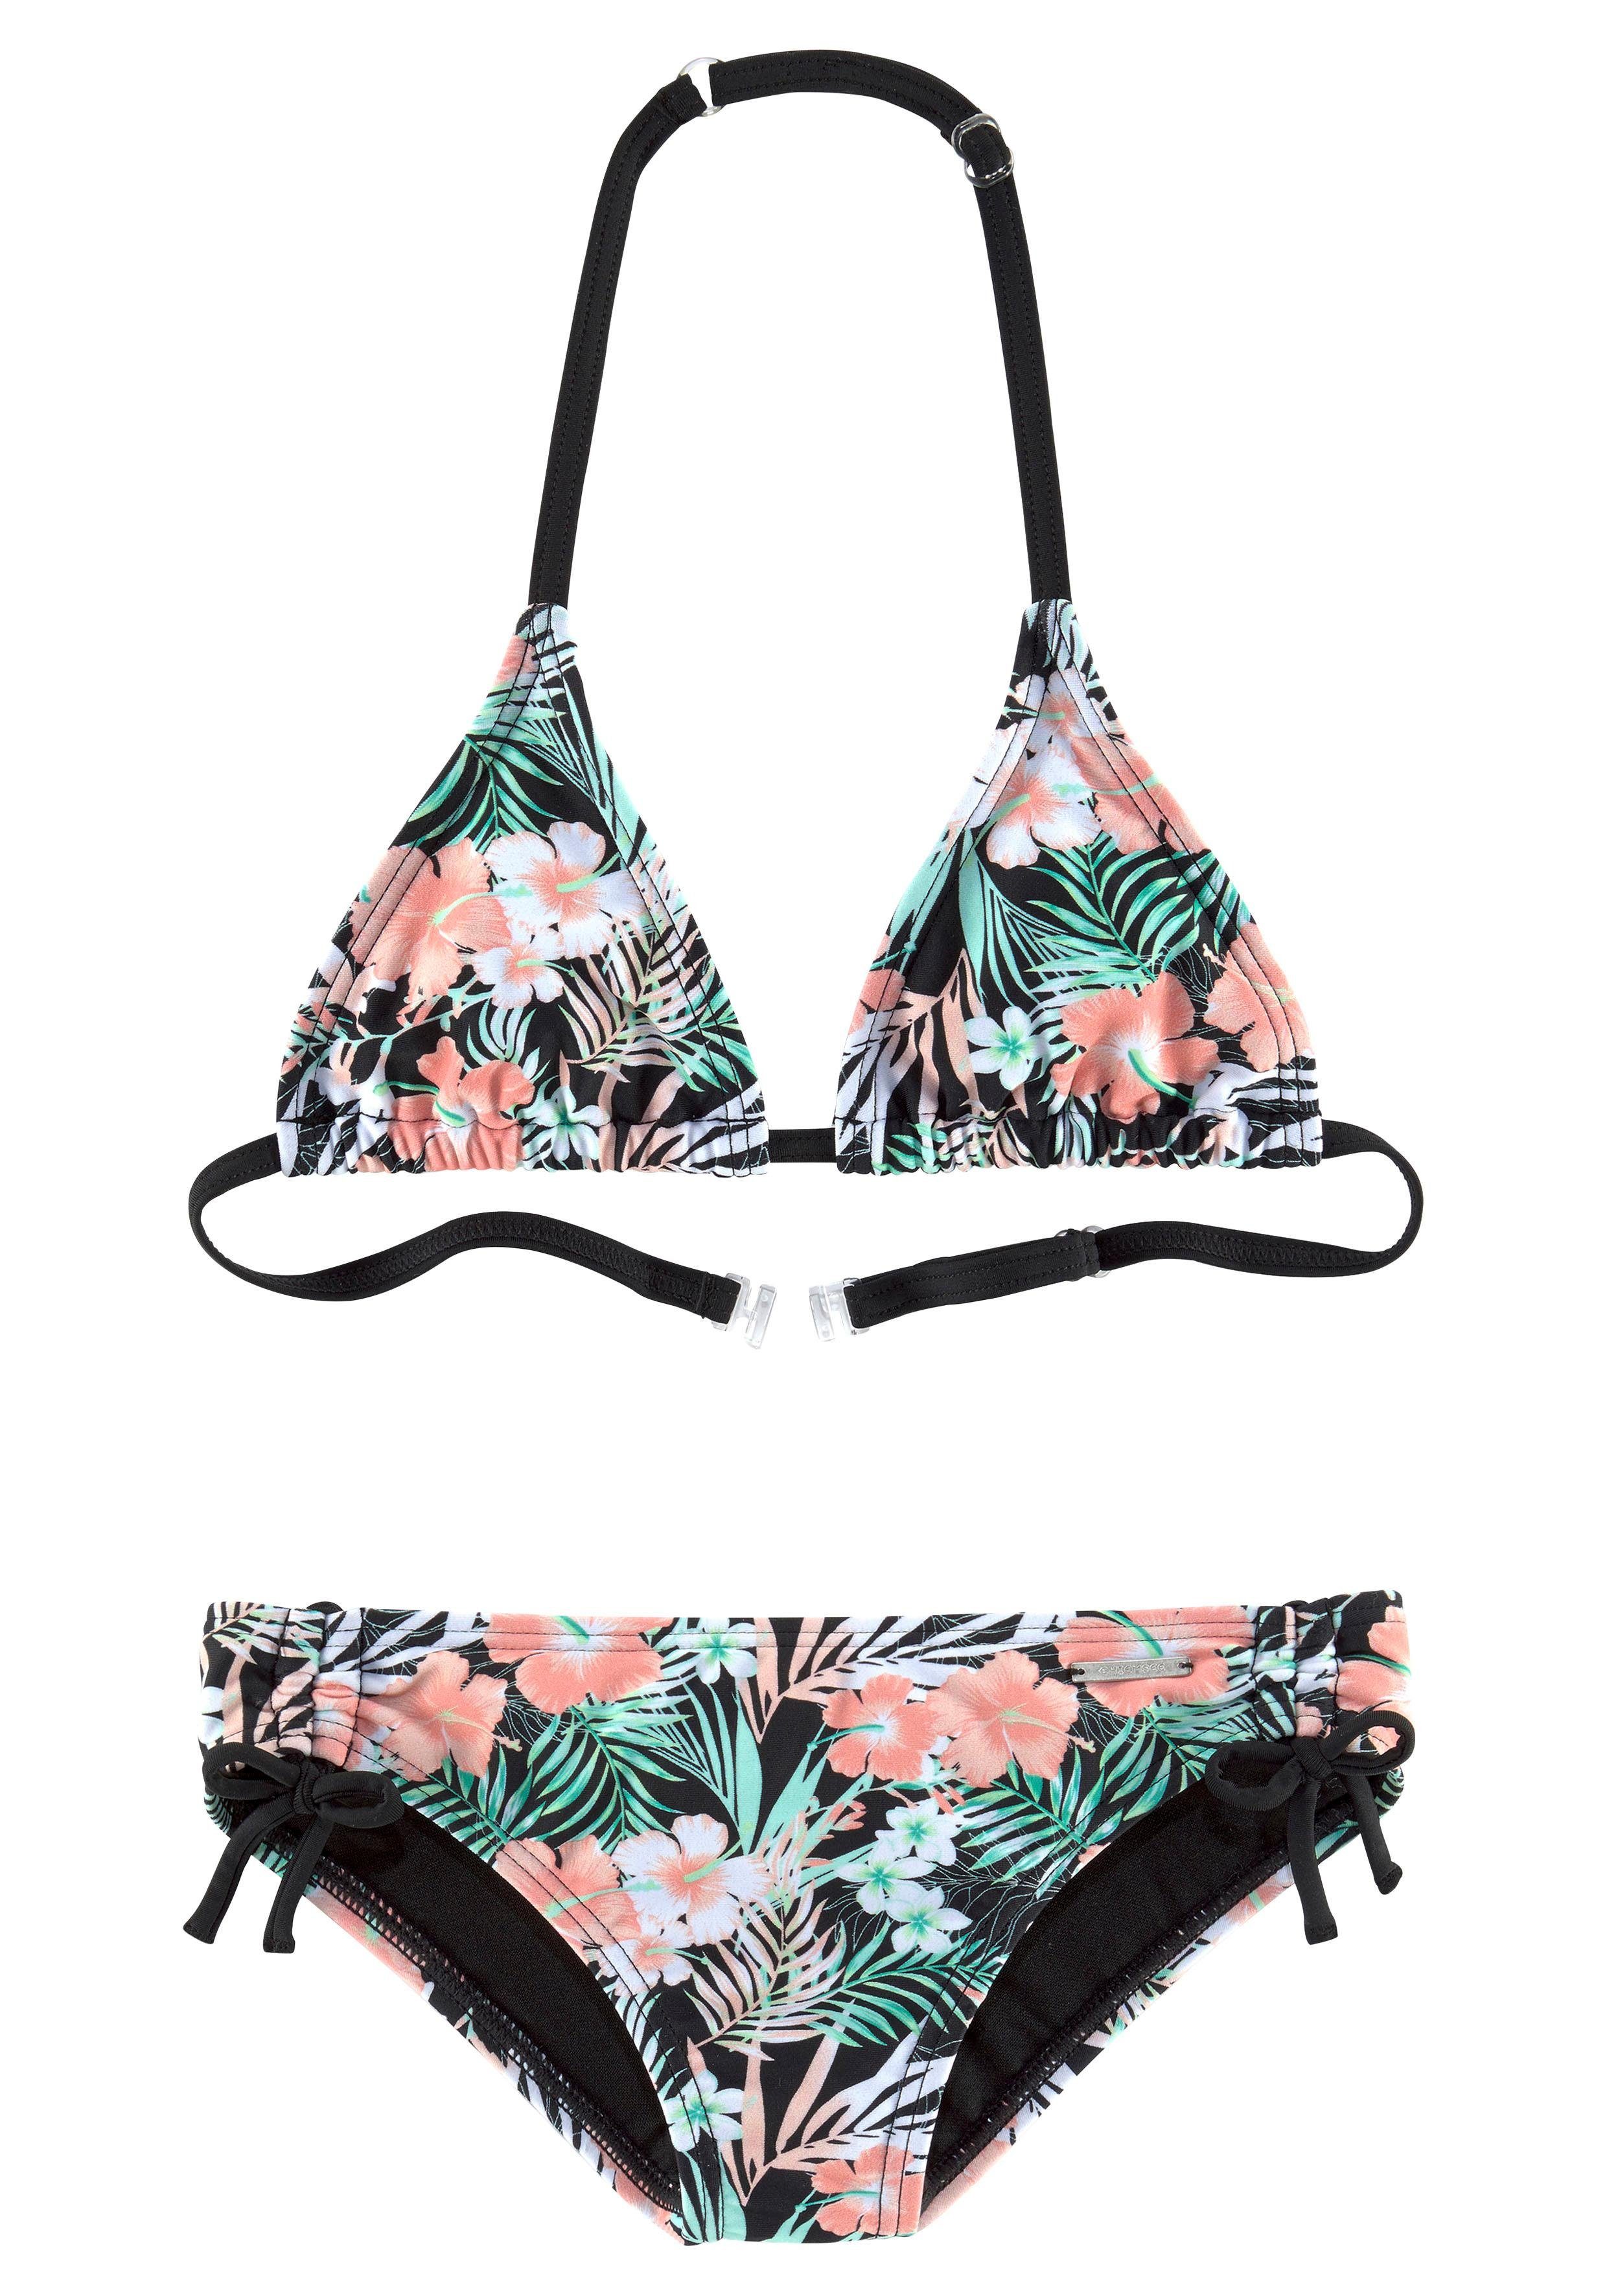 Chiemsee Triangel-Bikini floralem Design mit